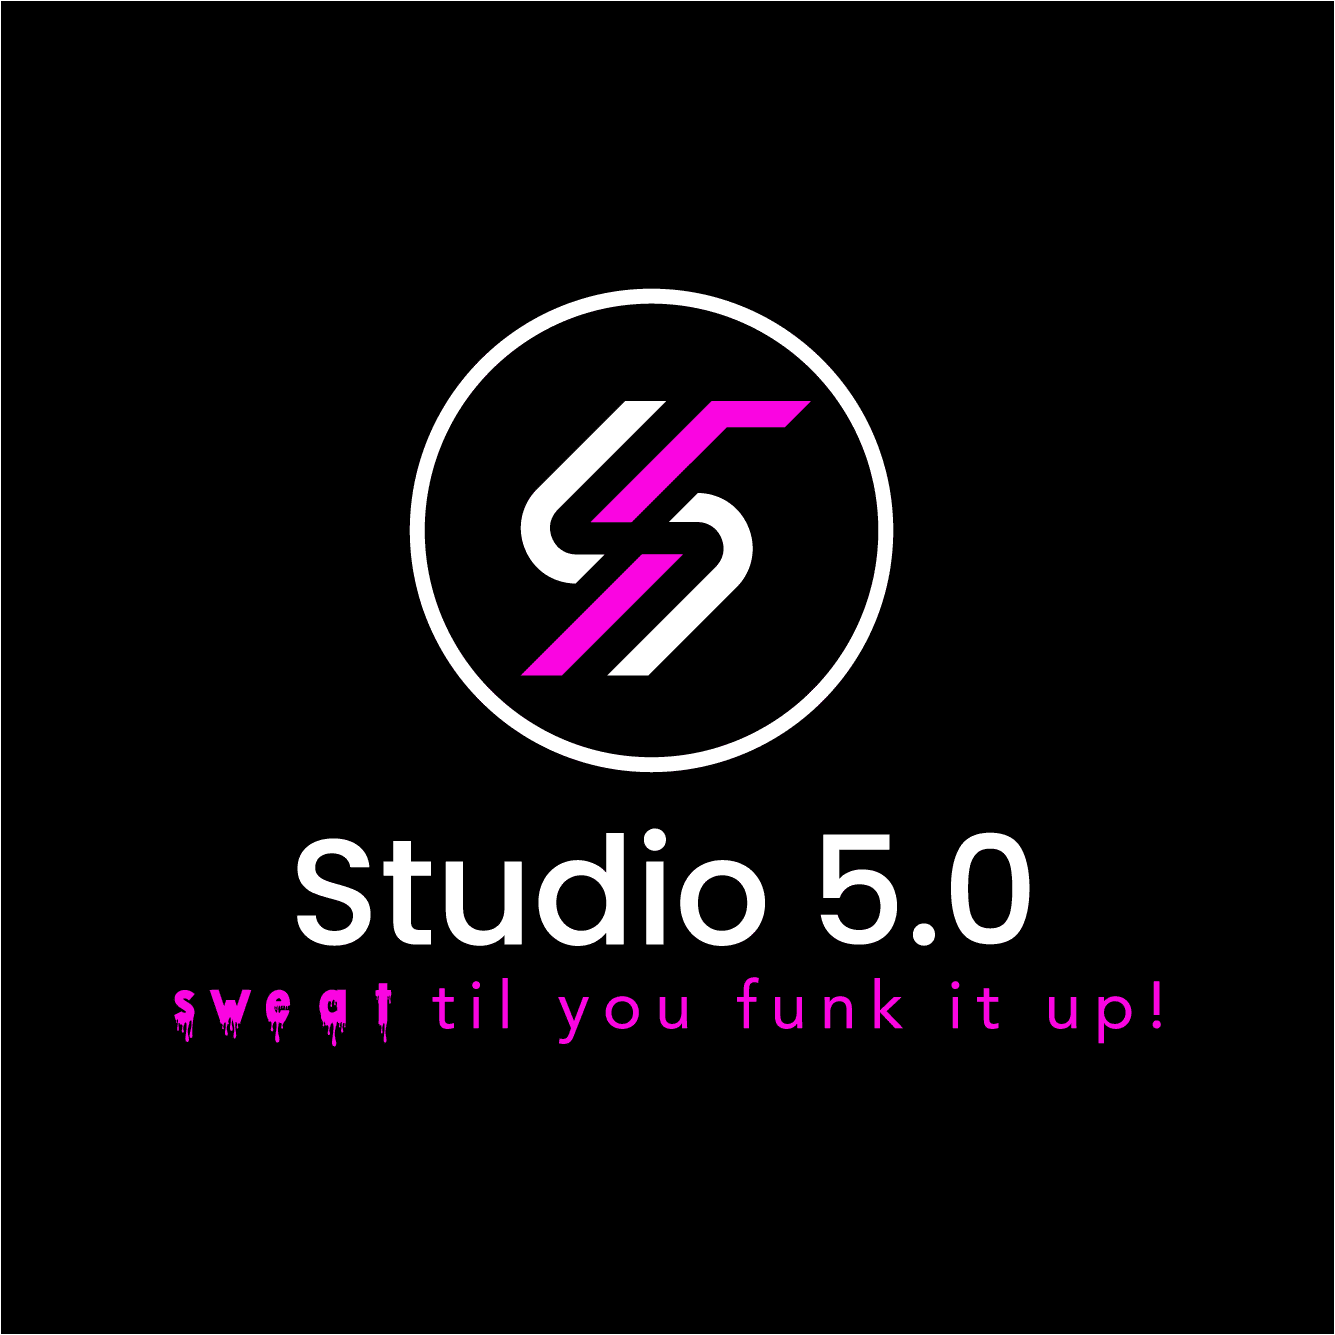 A black and purple logo for studio 5. 0